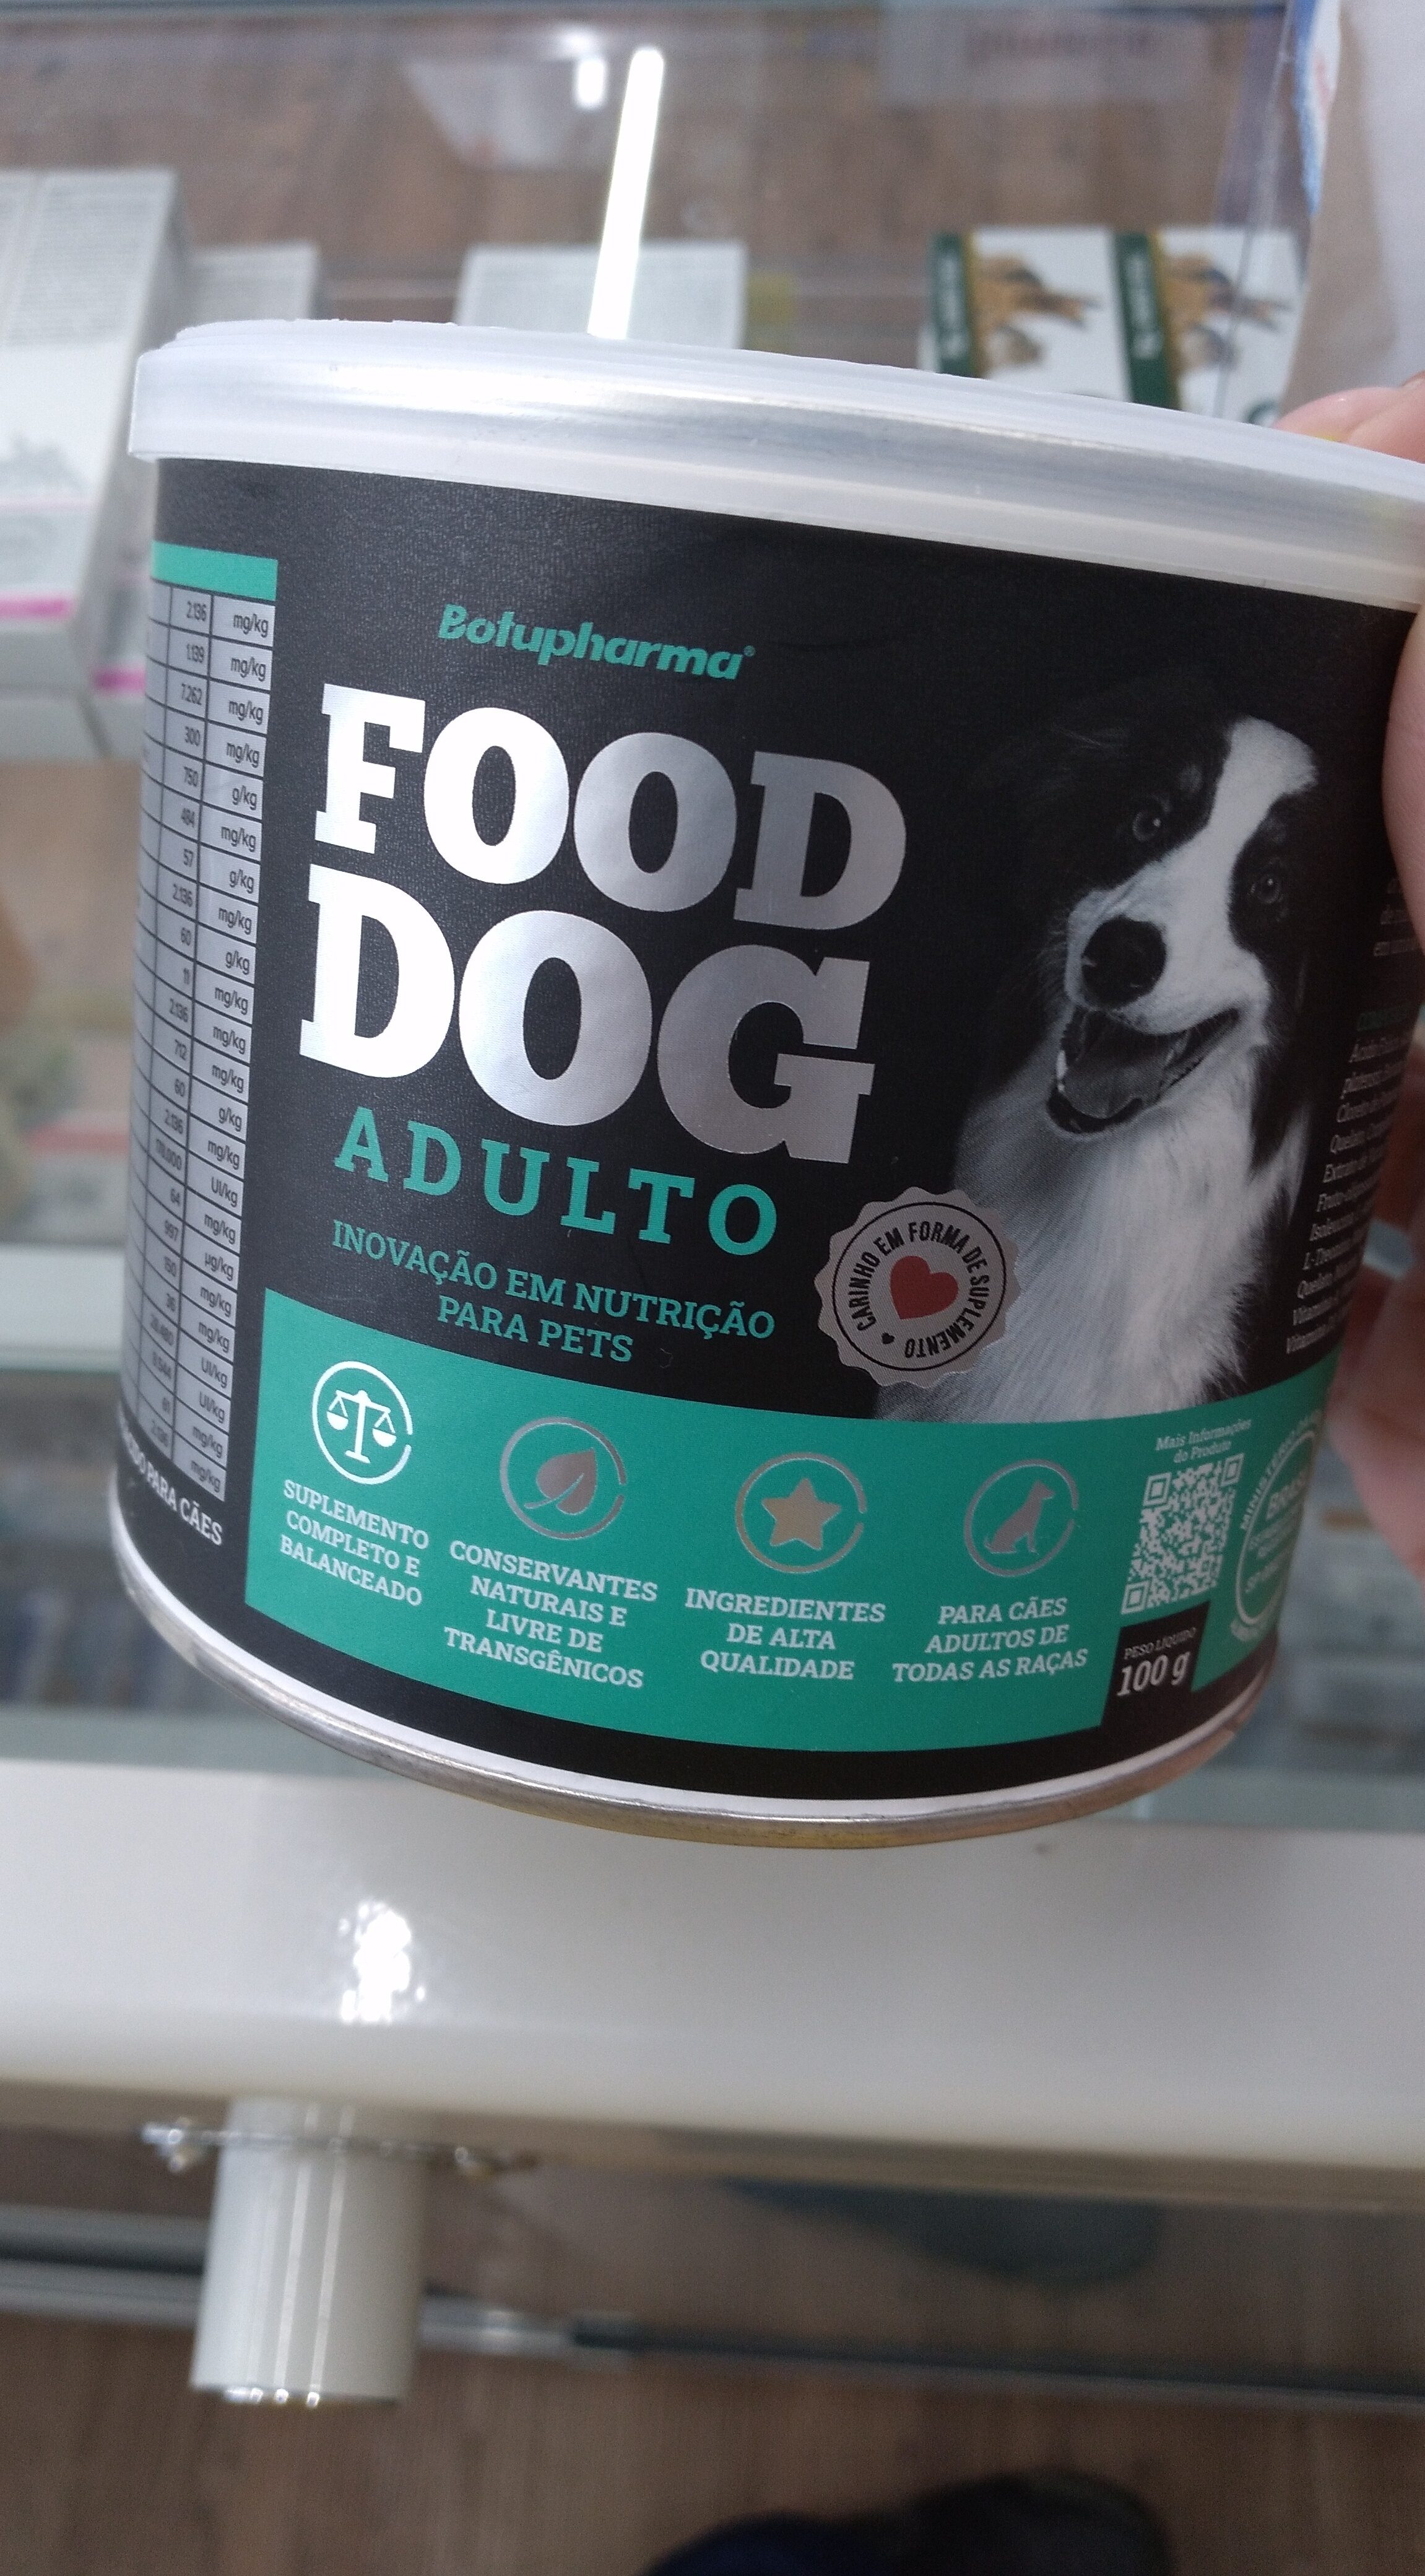 Food dog adulto - Product - pt